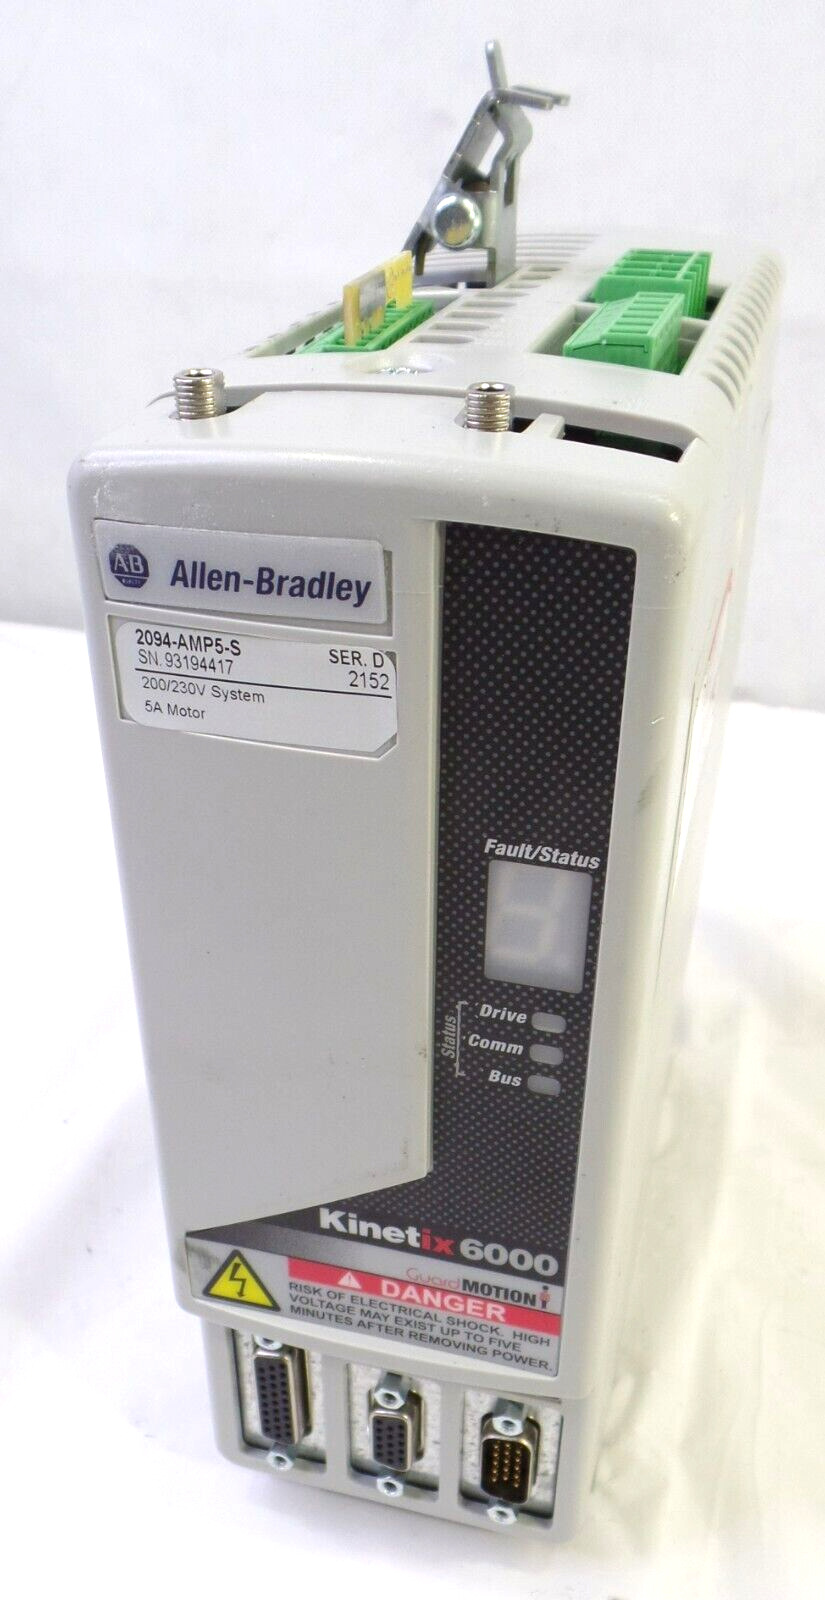 Allen Bradley Kinetix 6000 Servo Drive 2094-AMP5-S Ser D, For Parts/ Repair